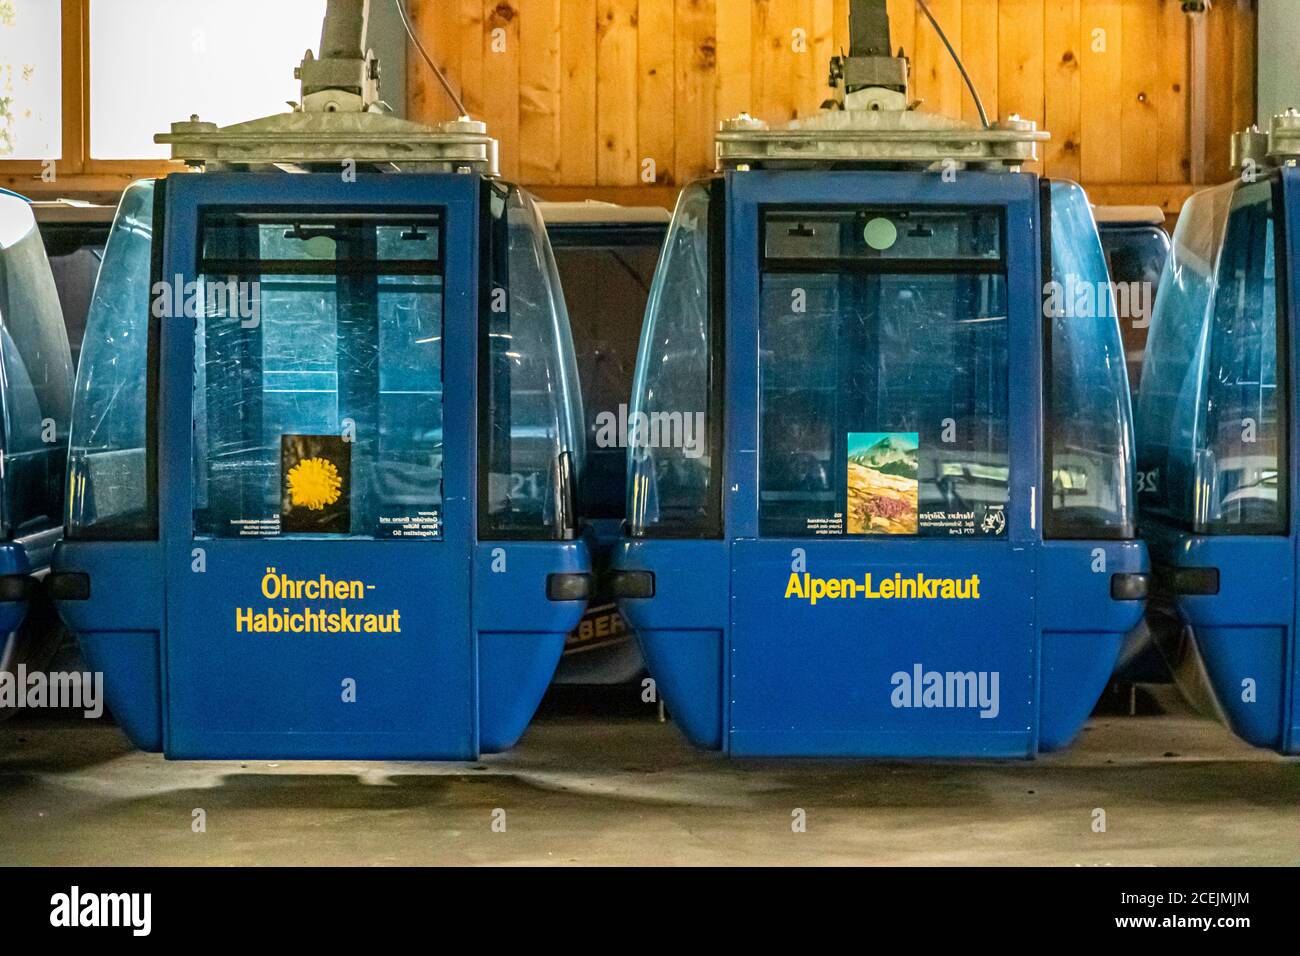 Cable car gondolas of the Stoss-Leiteli cable car with the names of alpine plants: auricula-hawkweed, alpine ragwort near Lenk, Switzerland Stock Photo